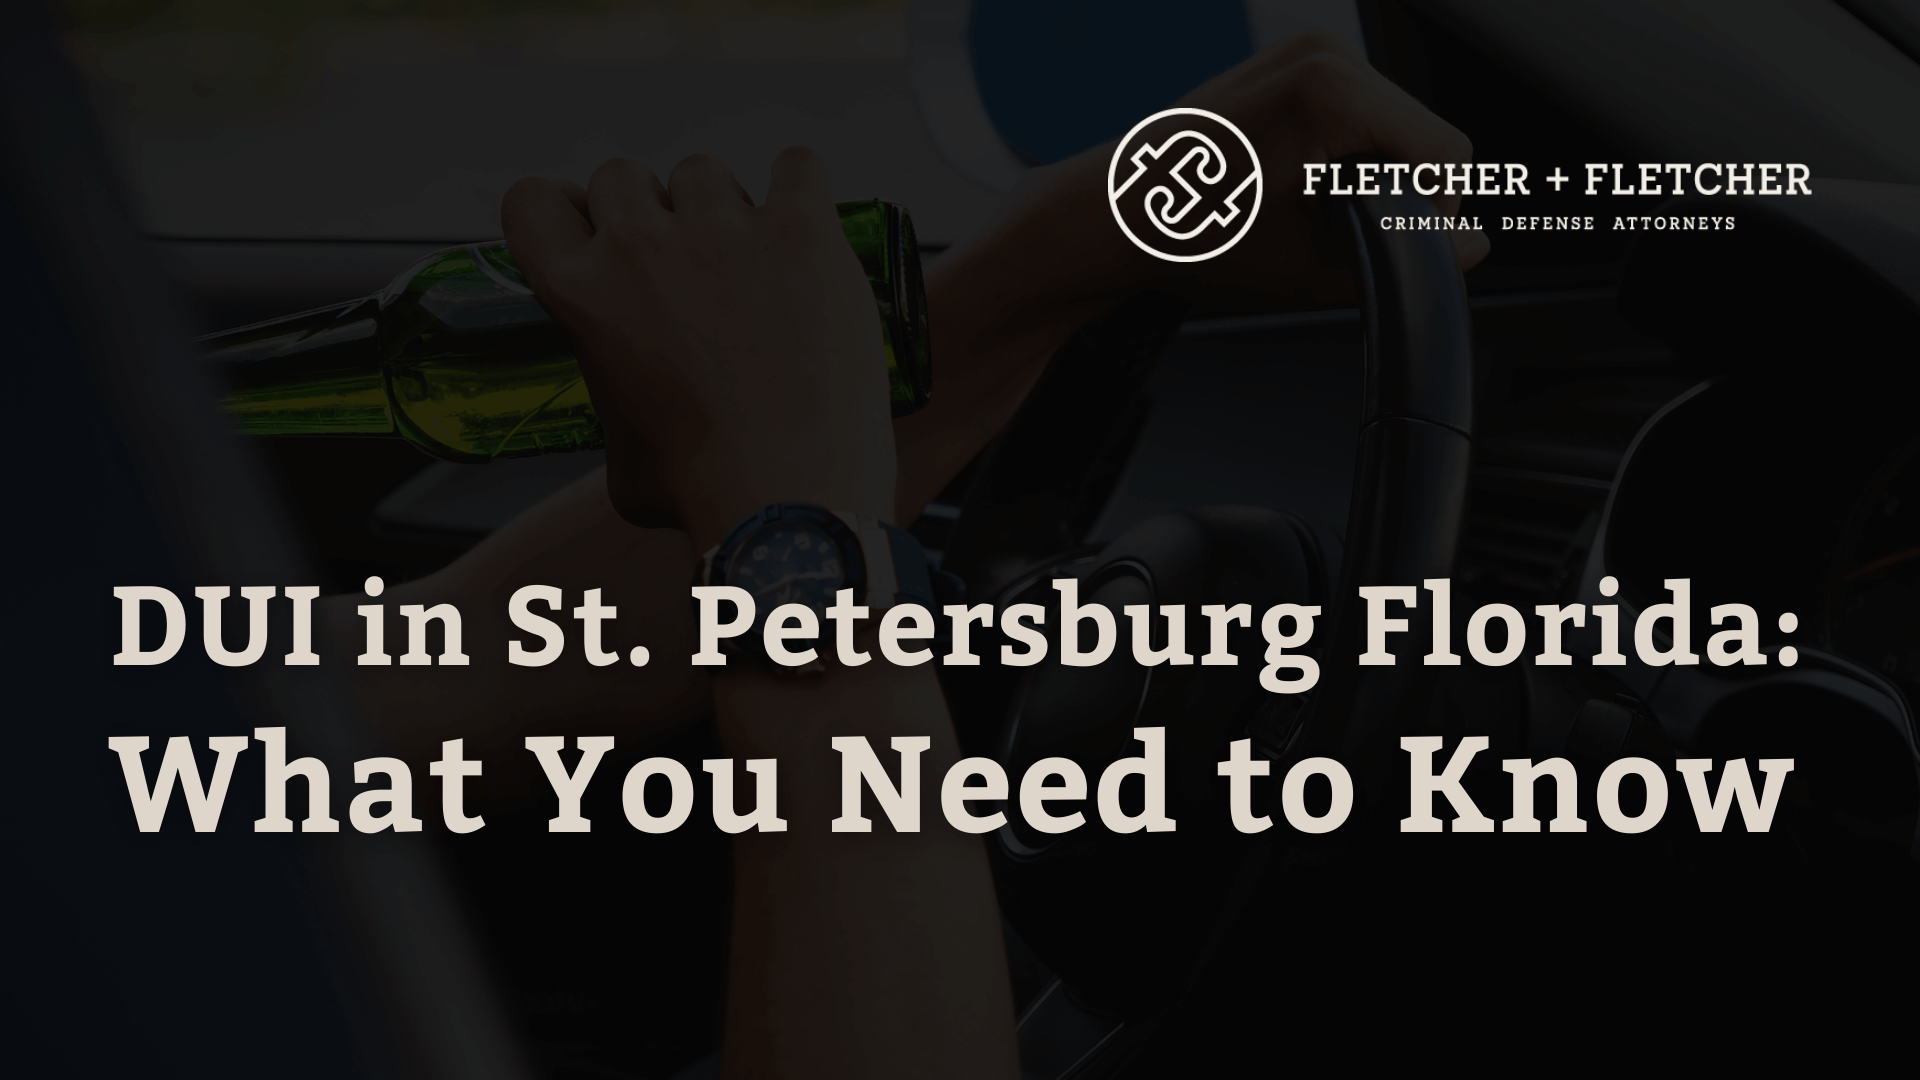 DUI in St. Petersburg Florida - fletcher and fletcher - st pete florida criminal defense